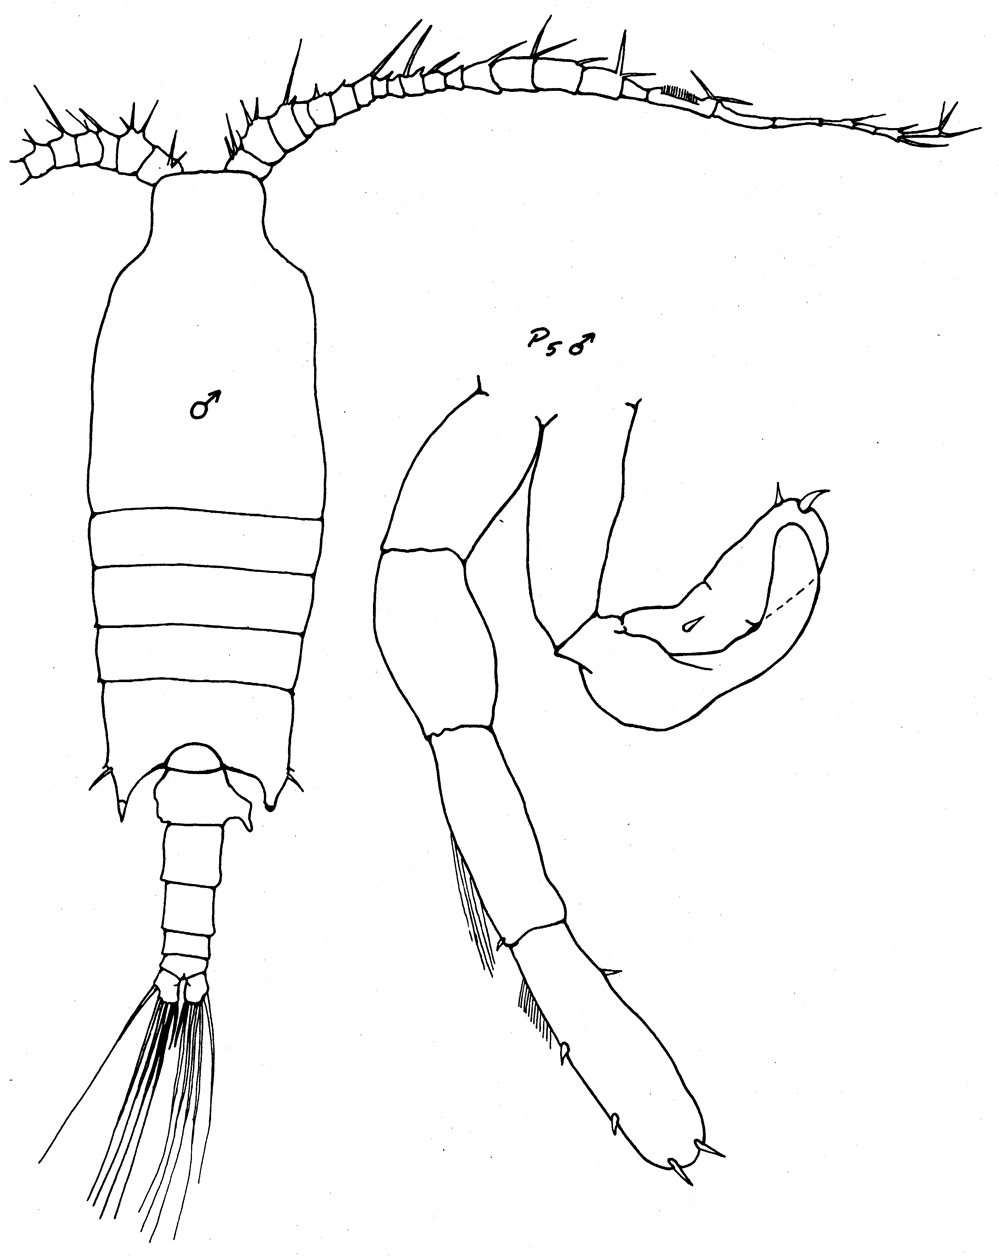 Species Candacia cheirura - Plate 12 of morphological figures